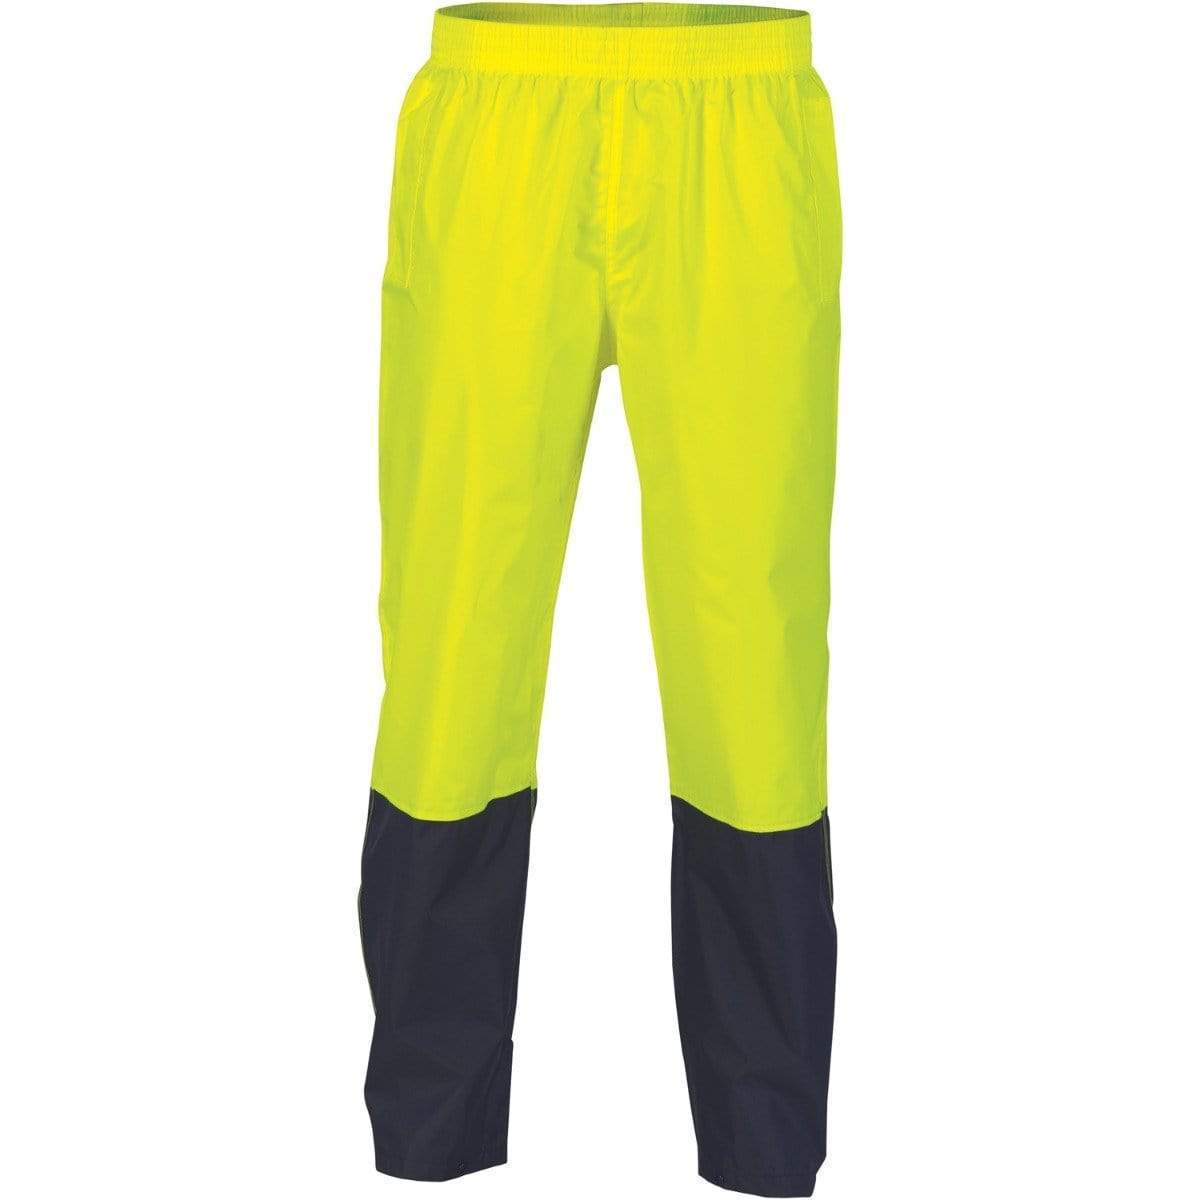 Dnc Workwear Hi-vis Two-tone Lightweight Rain Pants - 3878 Work Wear DNC Workwear Yellow/Navy S 